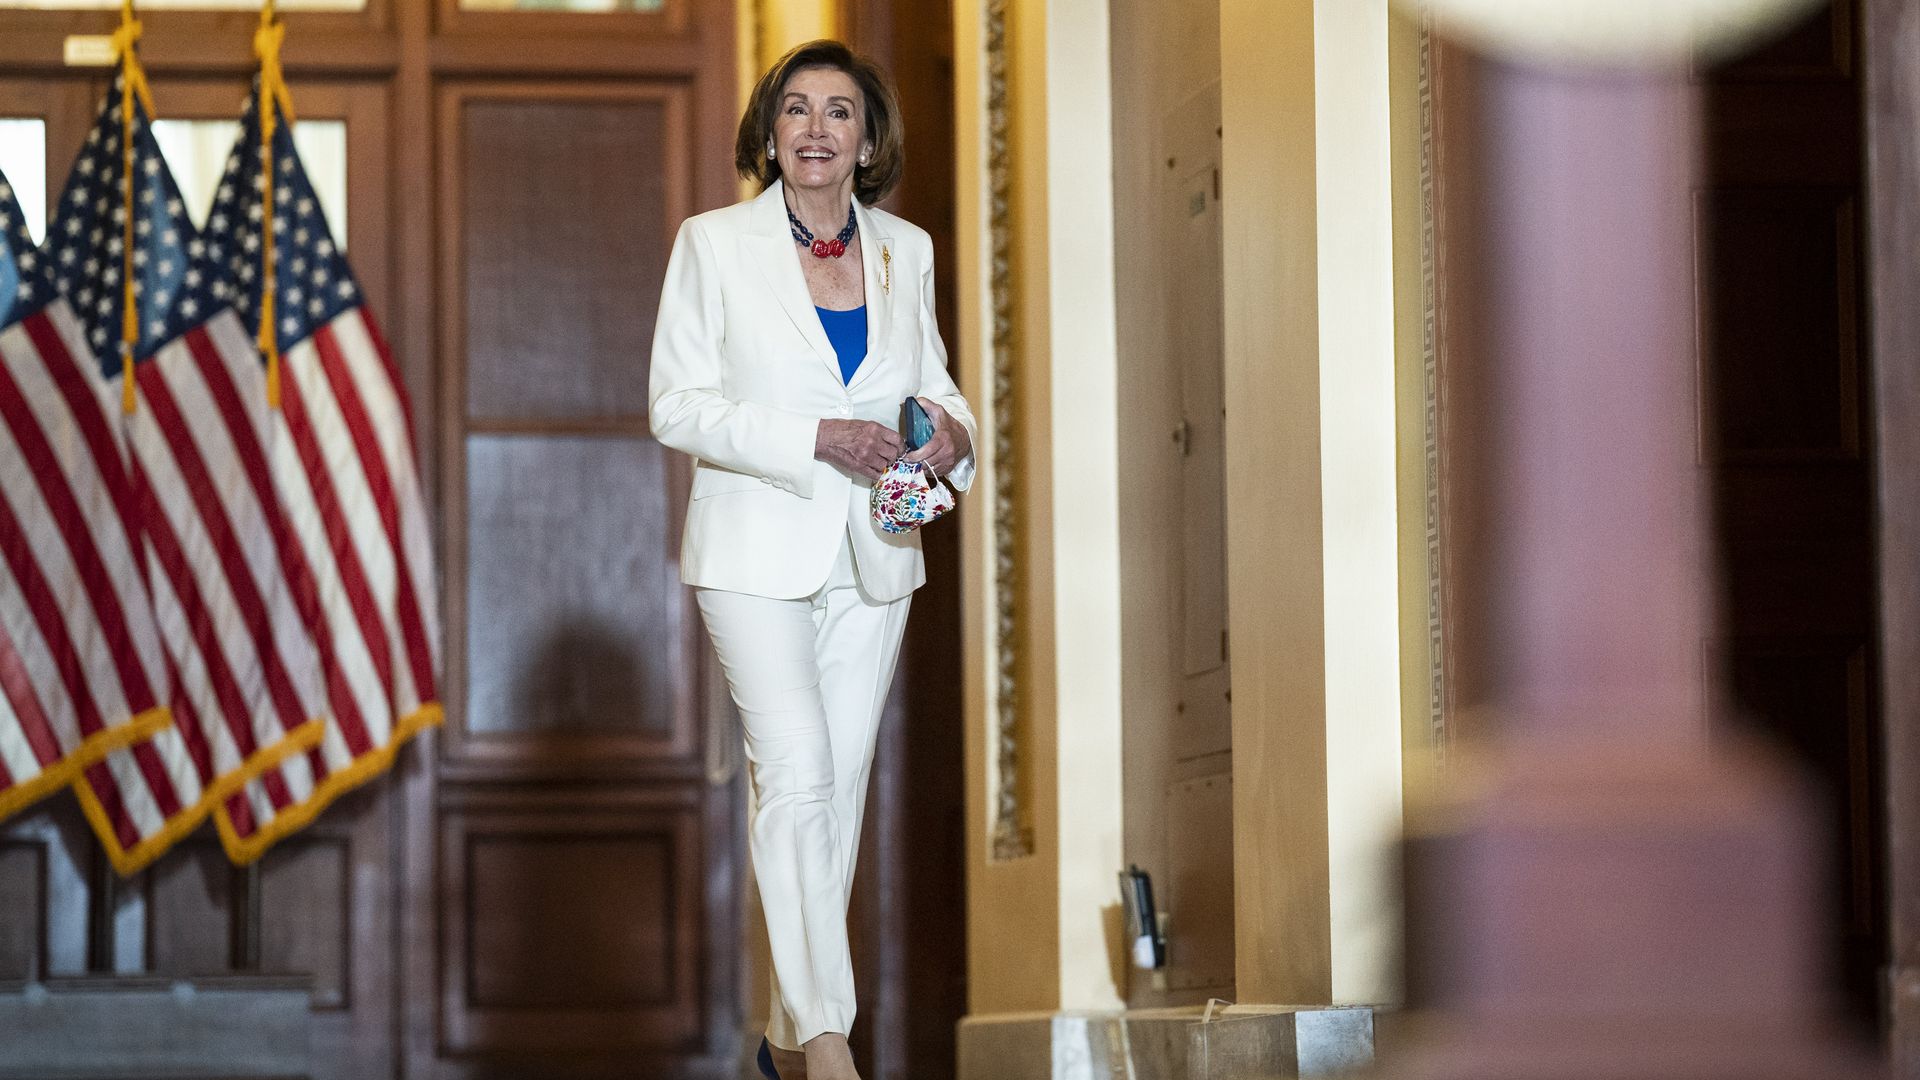 House Speaker Nancy Pelosi is seen walking through the U.S Capitol.